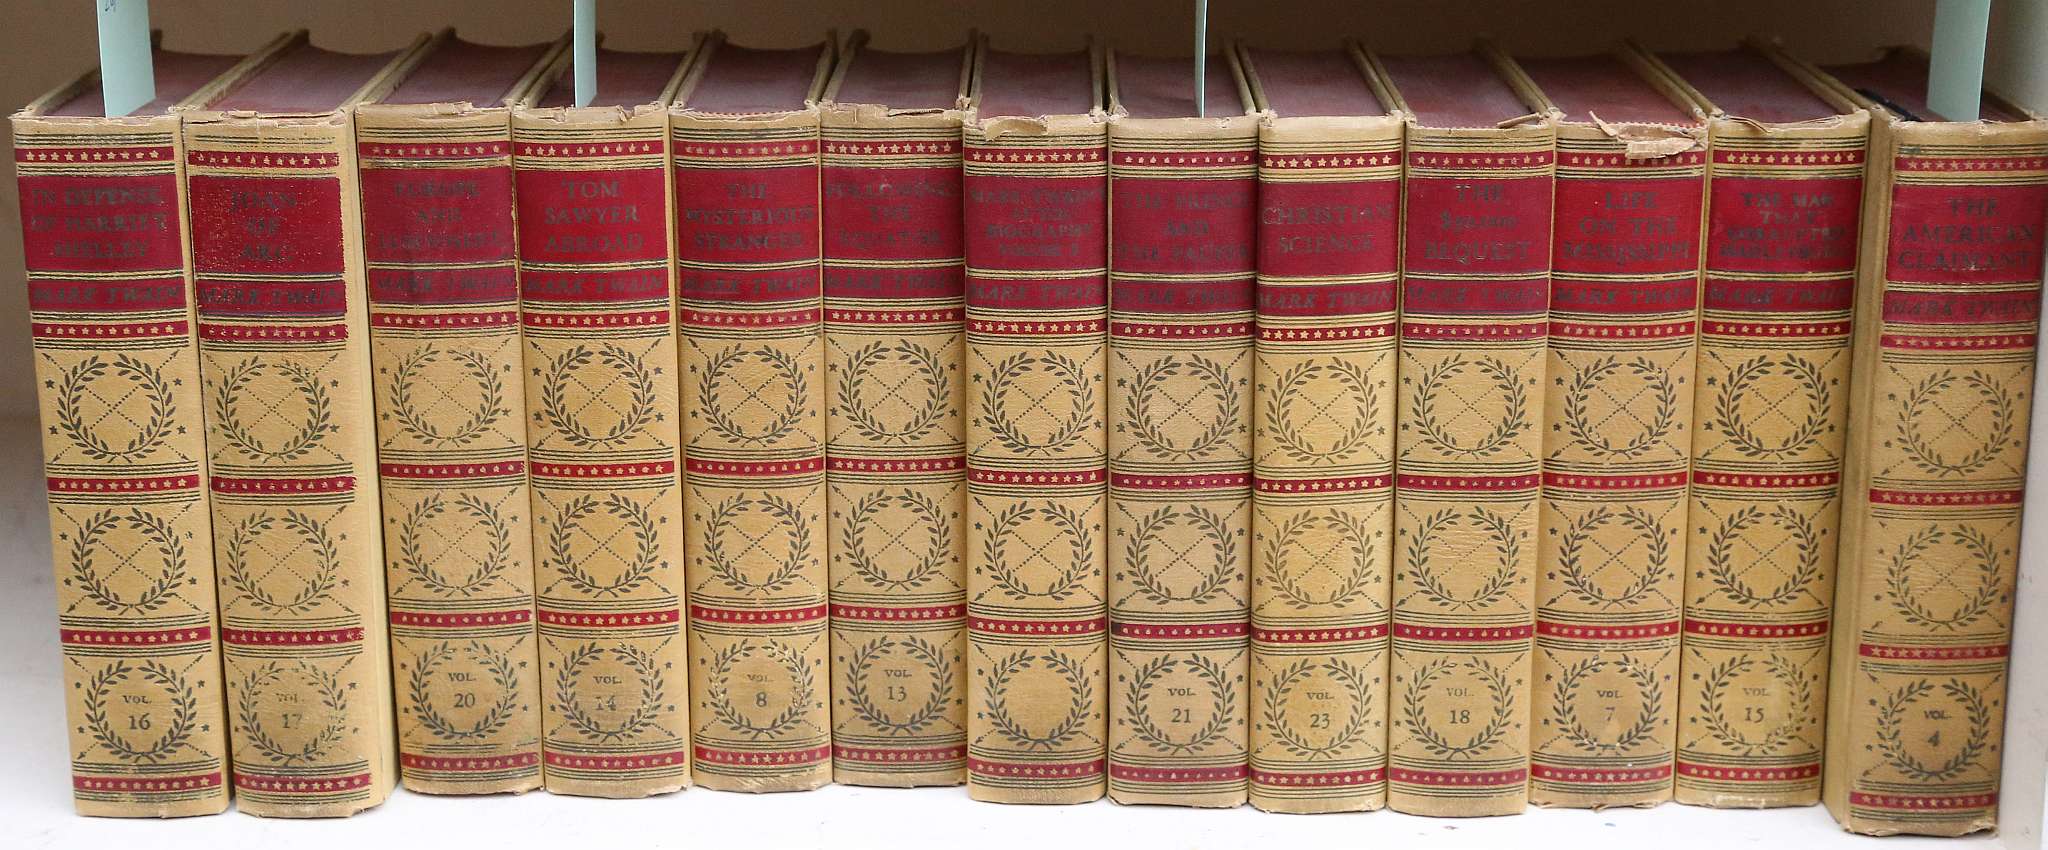 KIPLING, Rudyard. The Bombay edition of the works of Rudyard Kipling. London, Macmillan and Co., - Image 2 of 4